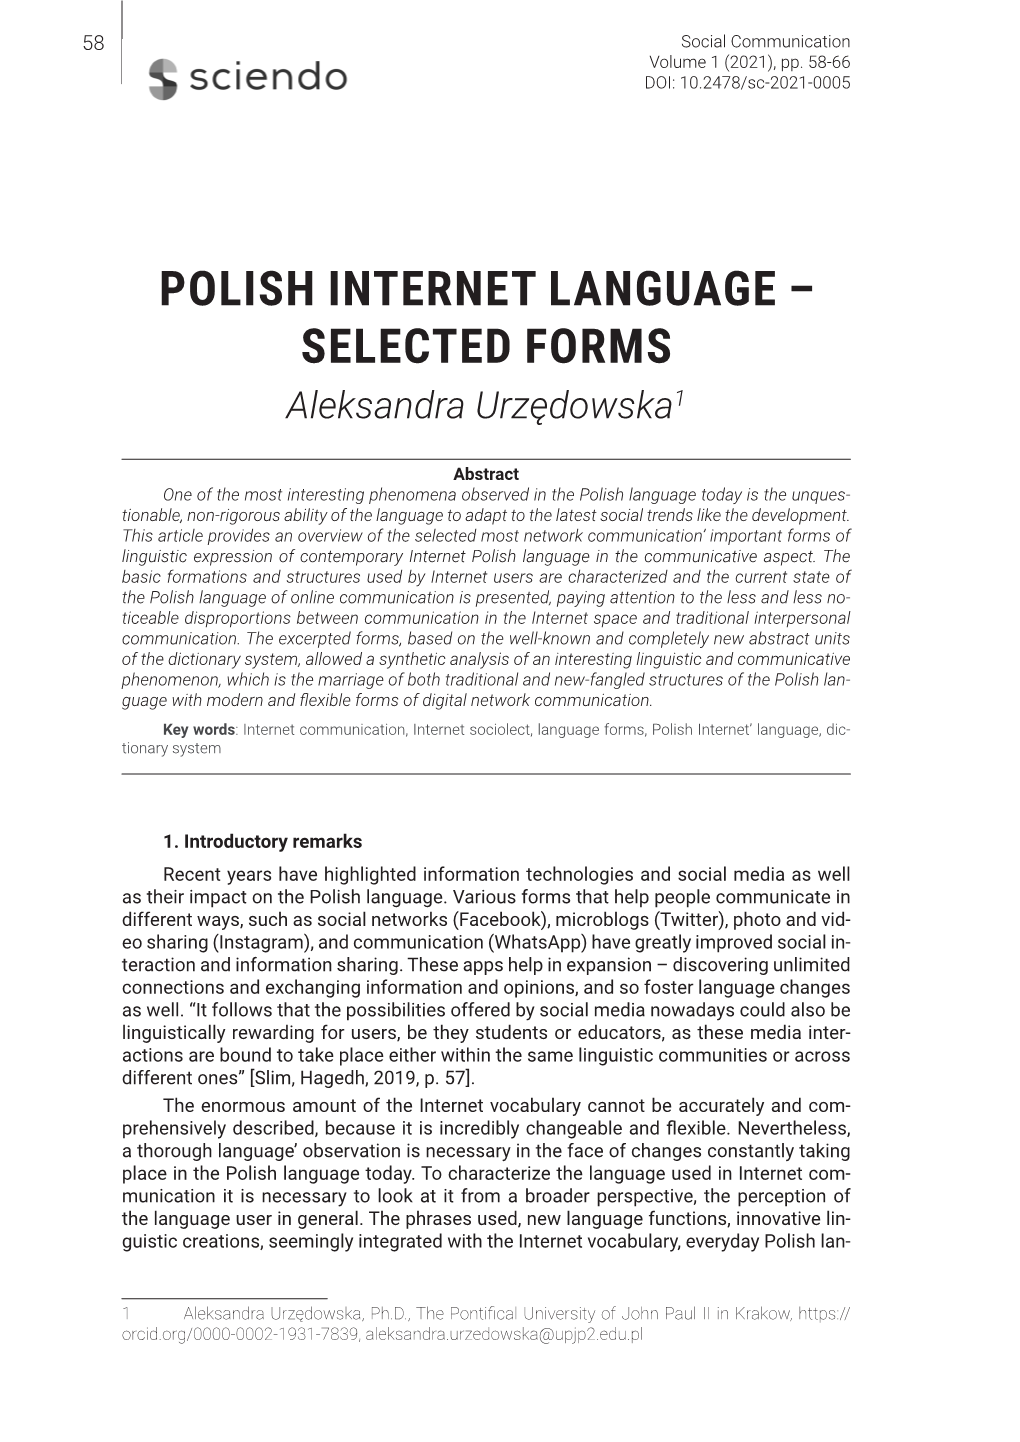 POLISH INTERNET LANGUAGE – SELECTED FORMS Aleksandra Urzędowska1